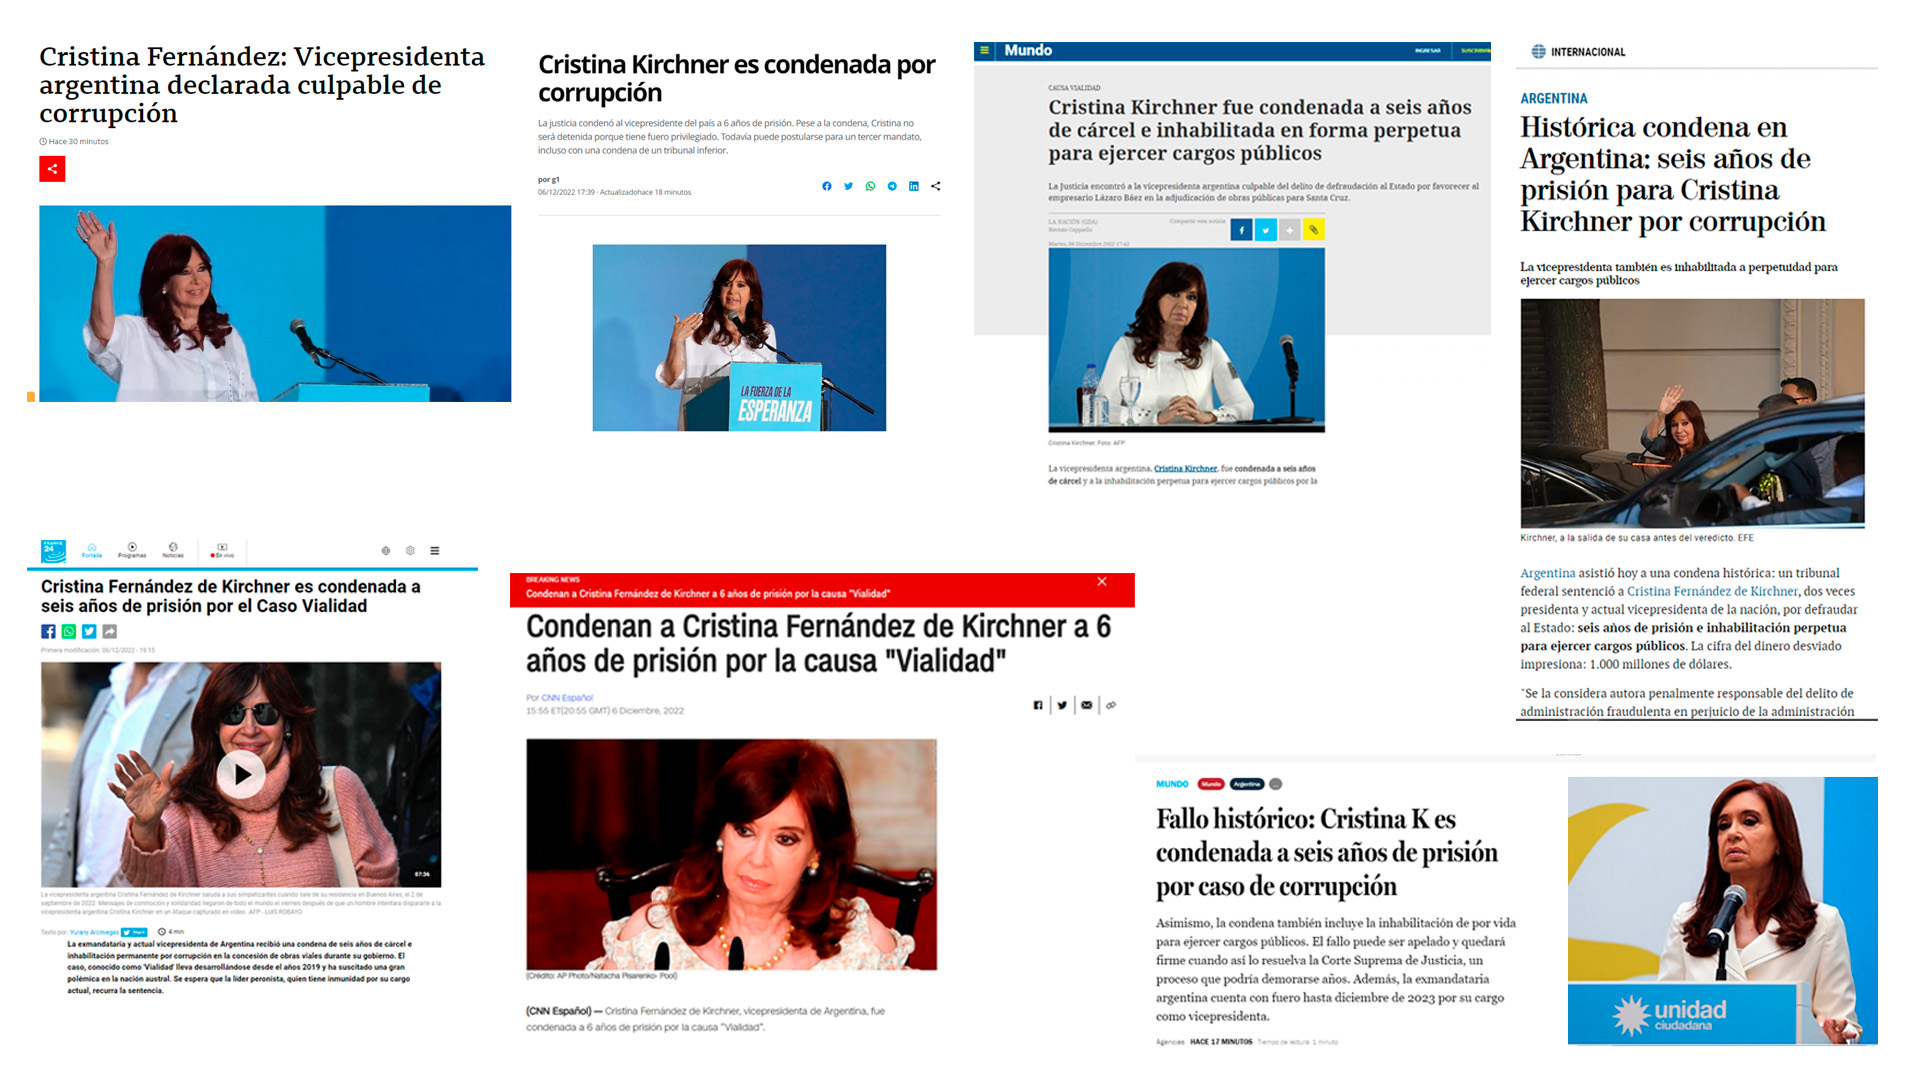 Cristina Kirchner es condenada